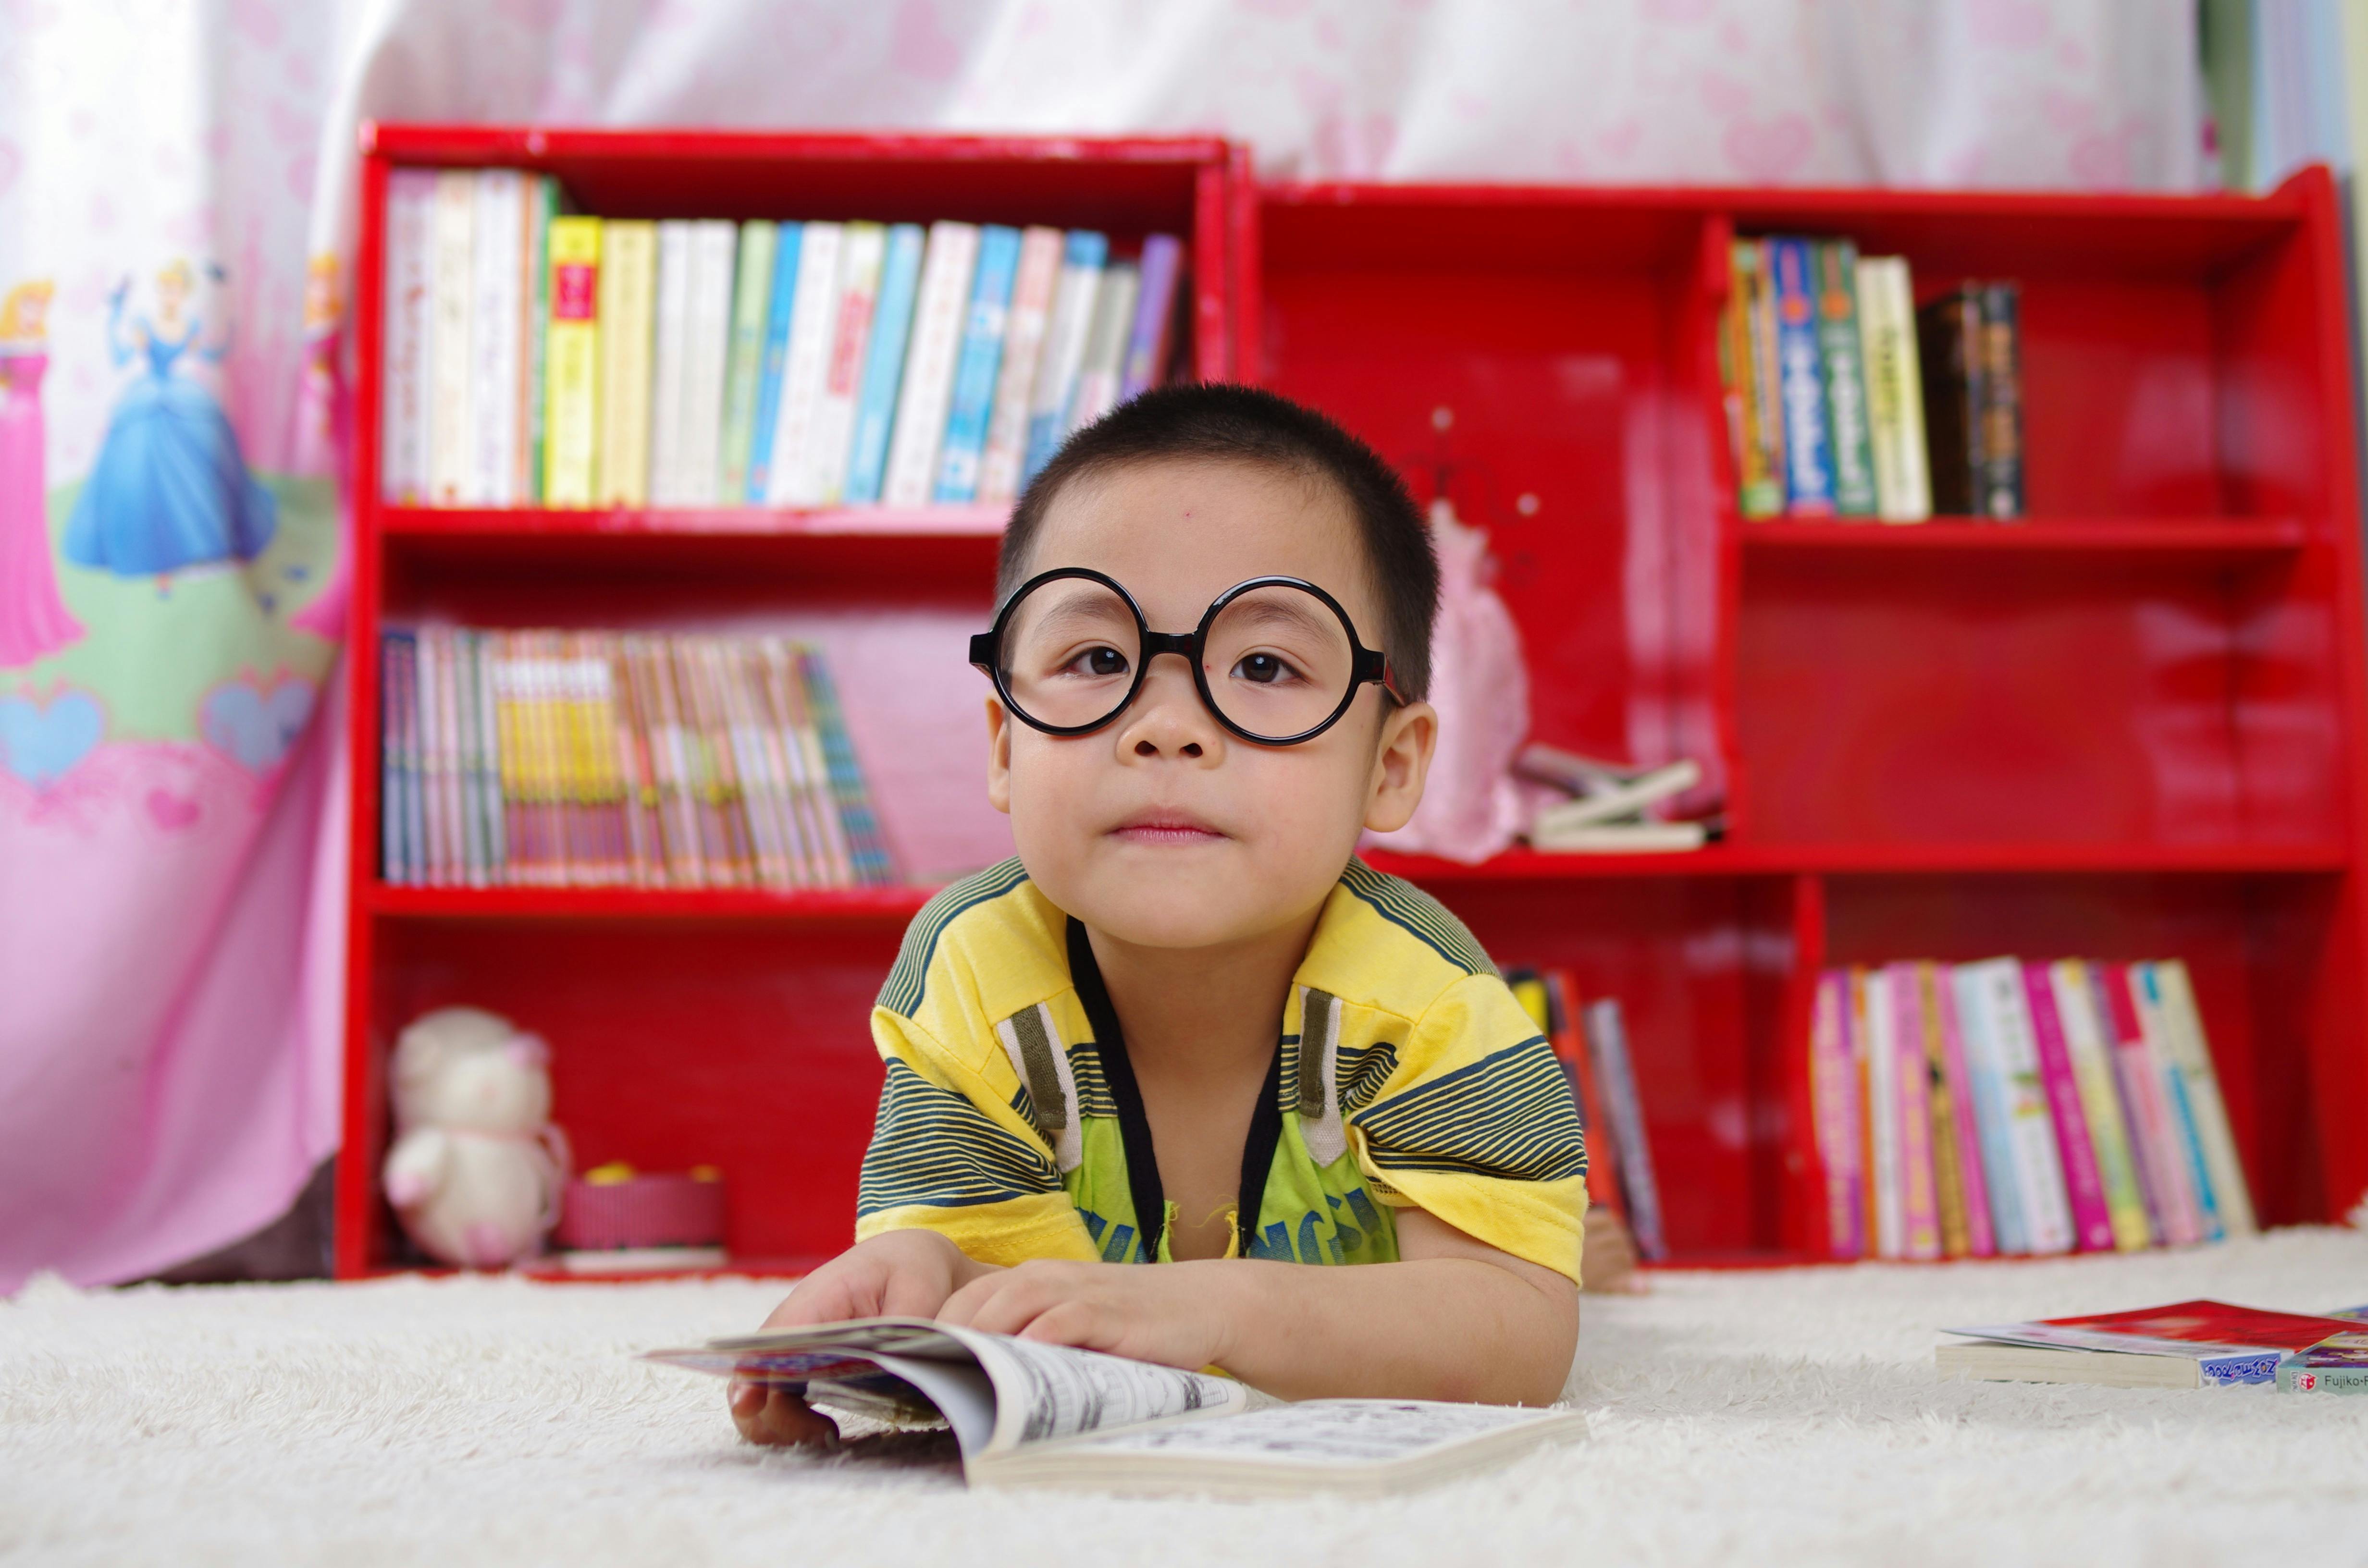 Little boy standing near bookshelf. | Photo: Pexels